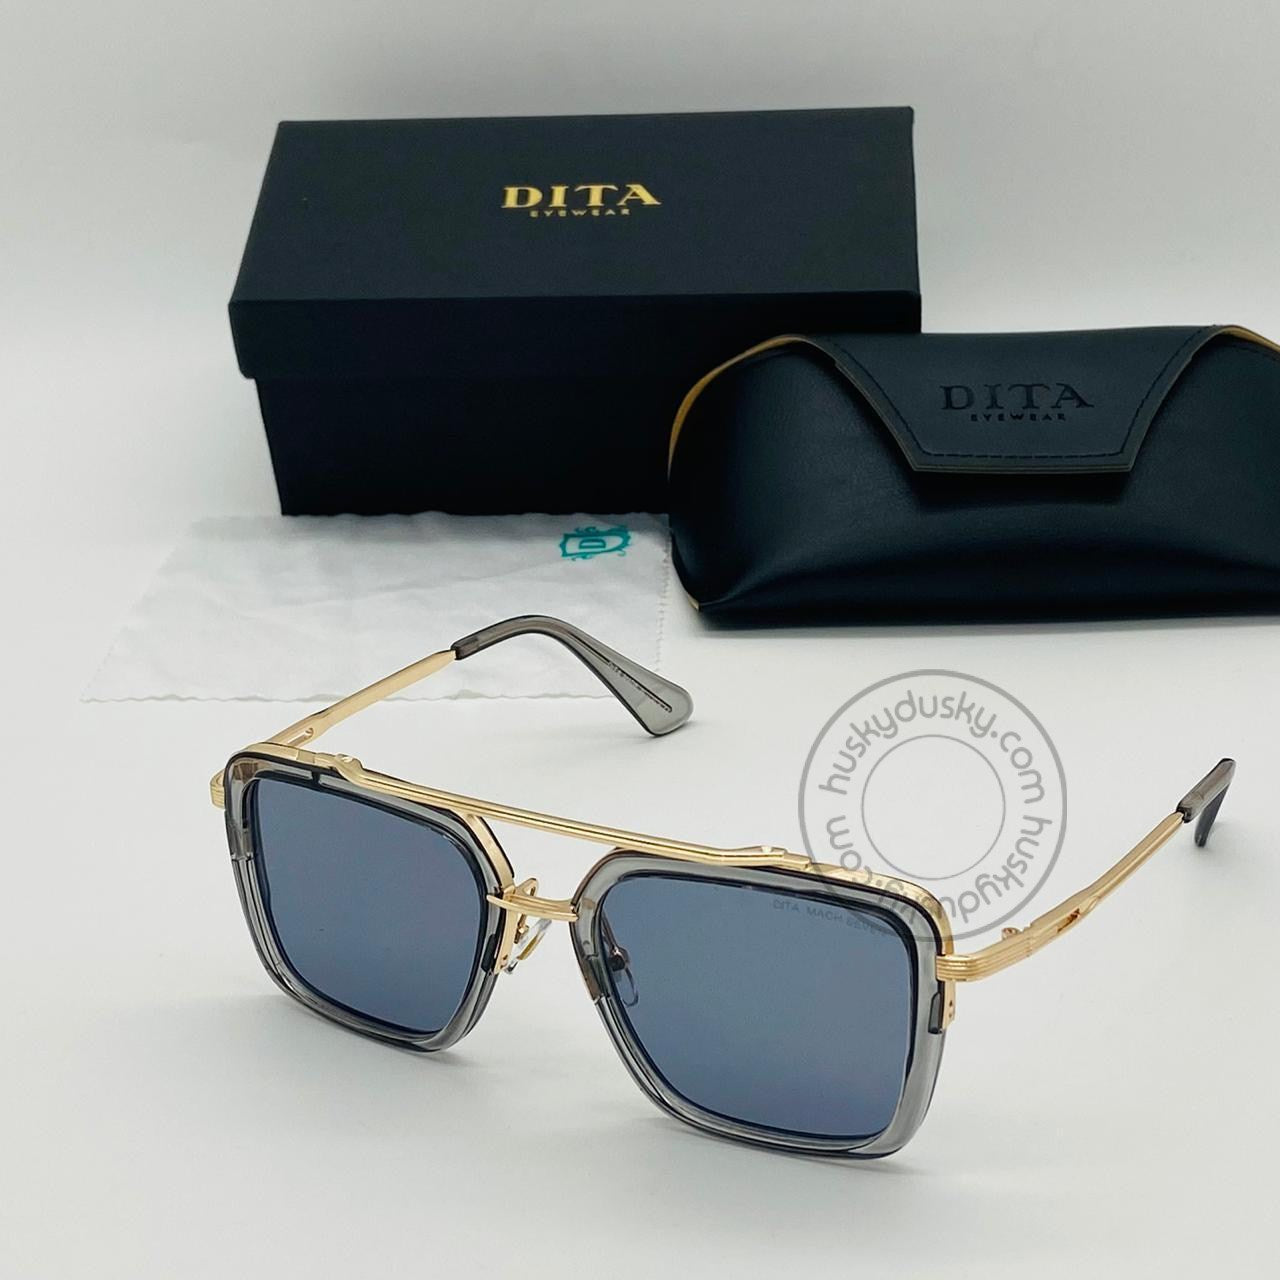 DITA Grey Color Glass Man's Women's Sunglass for Man Woman or Girl DT-20 Gold Frame Grey Stick Gift Sunglass